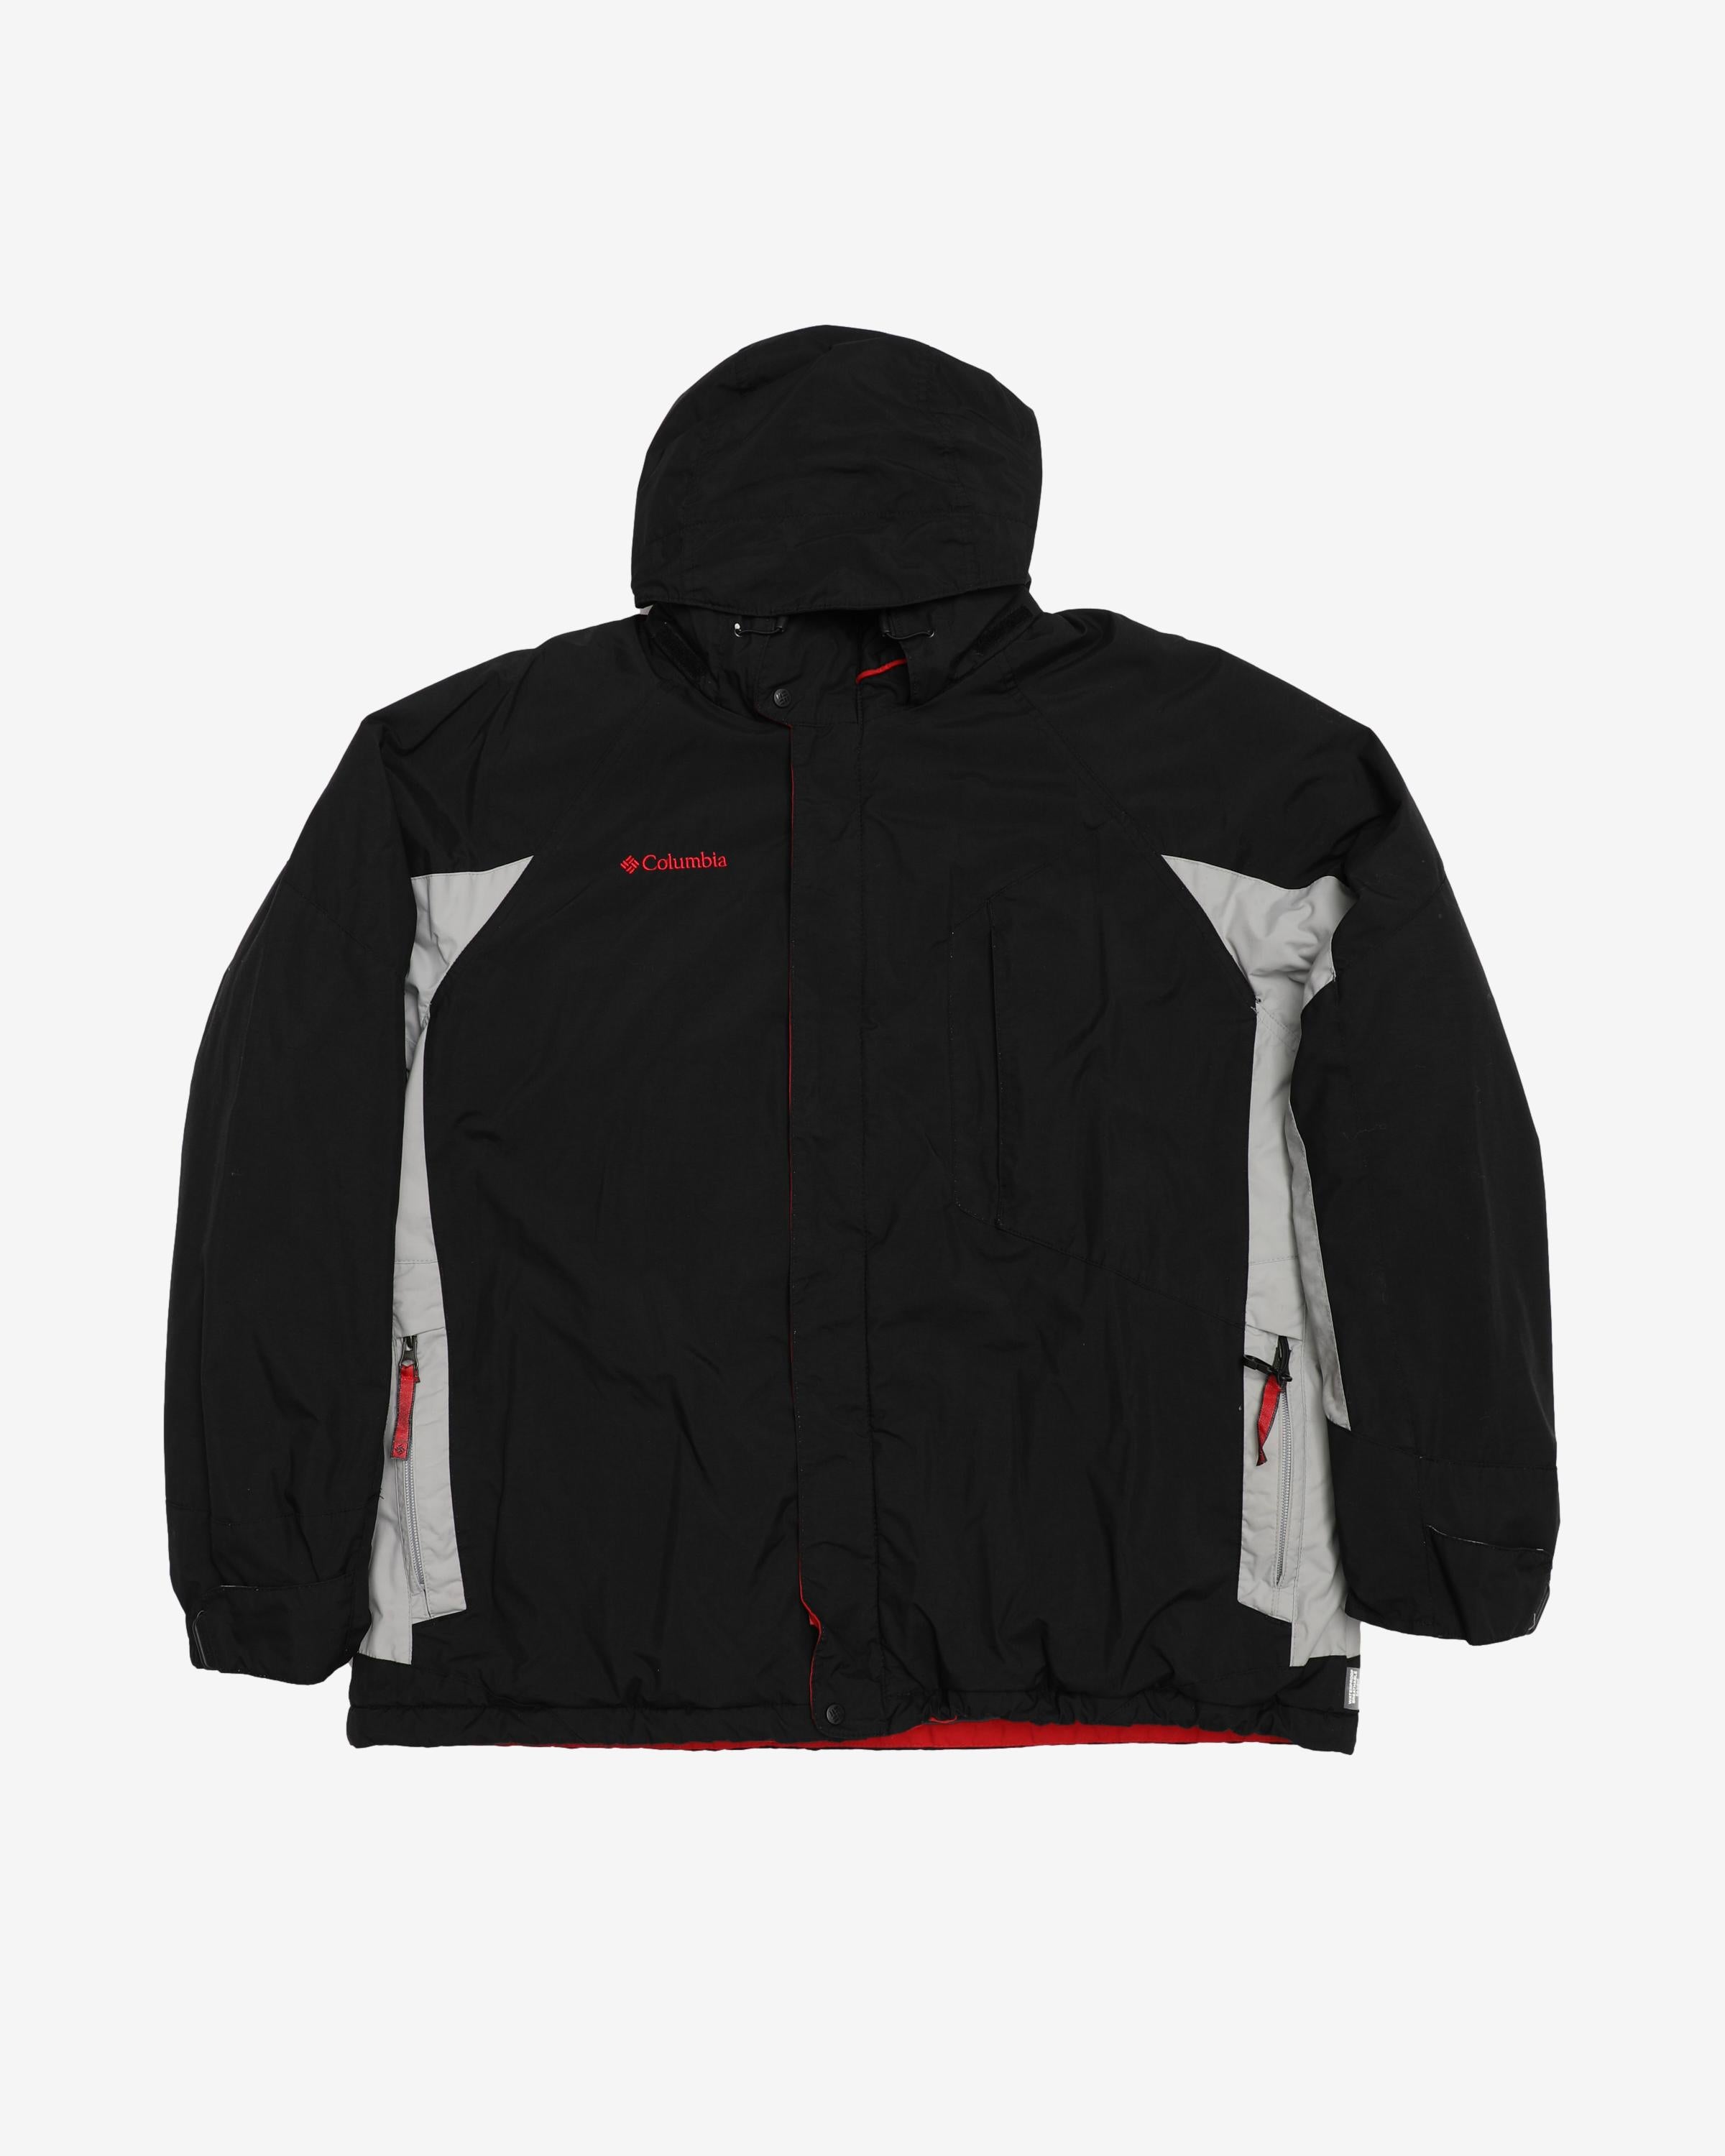 Columbia Black / Grey Padded Ski Jacket - L